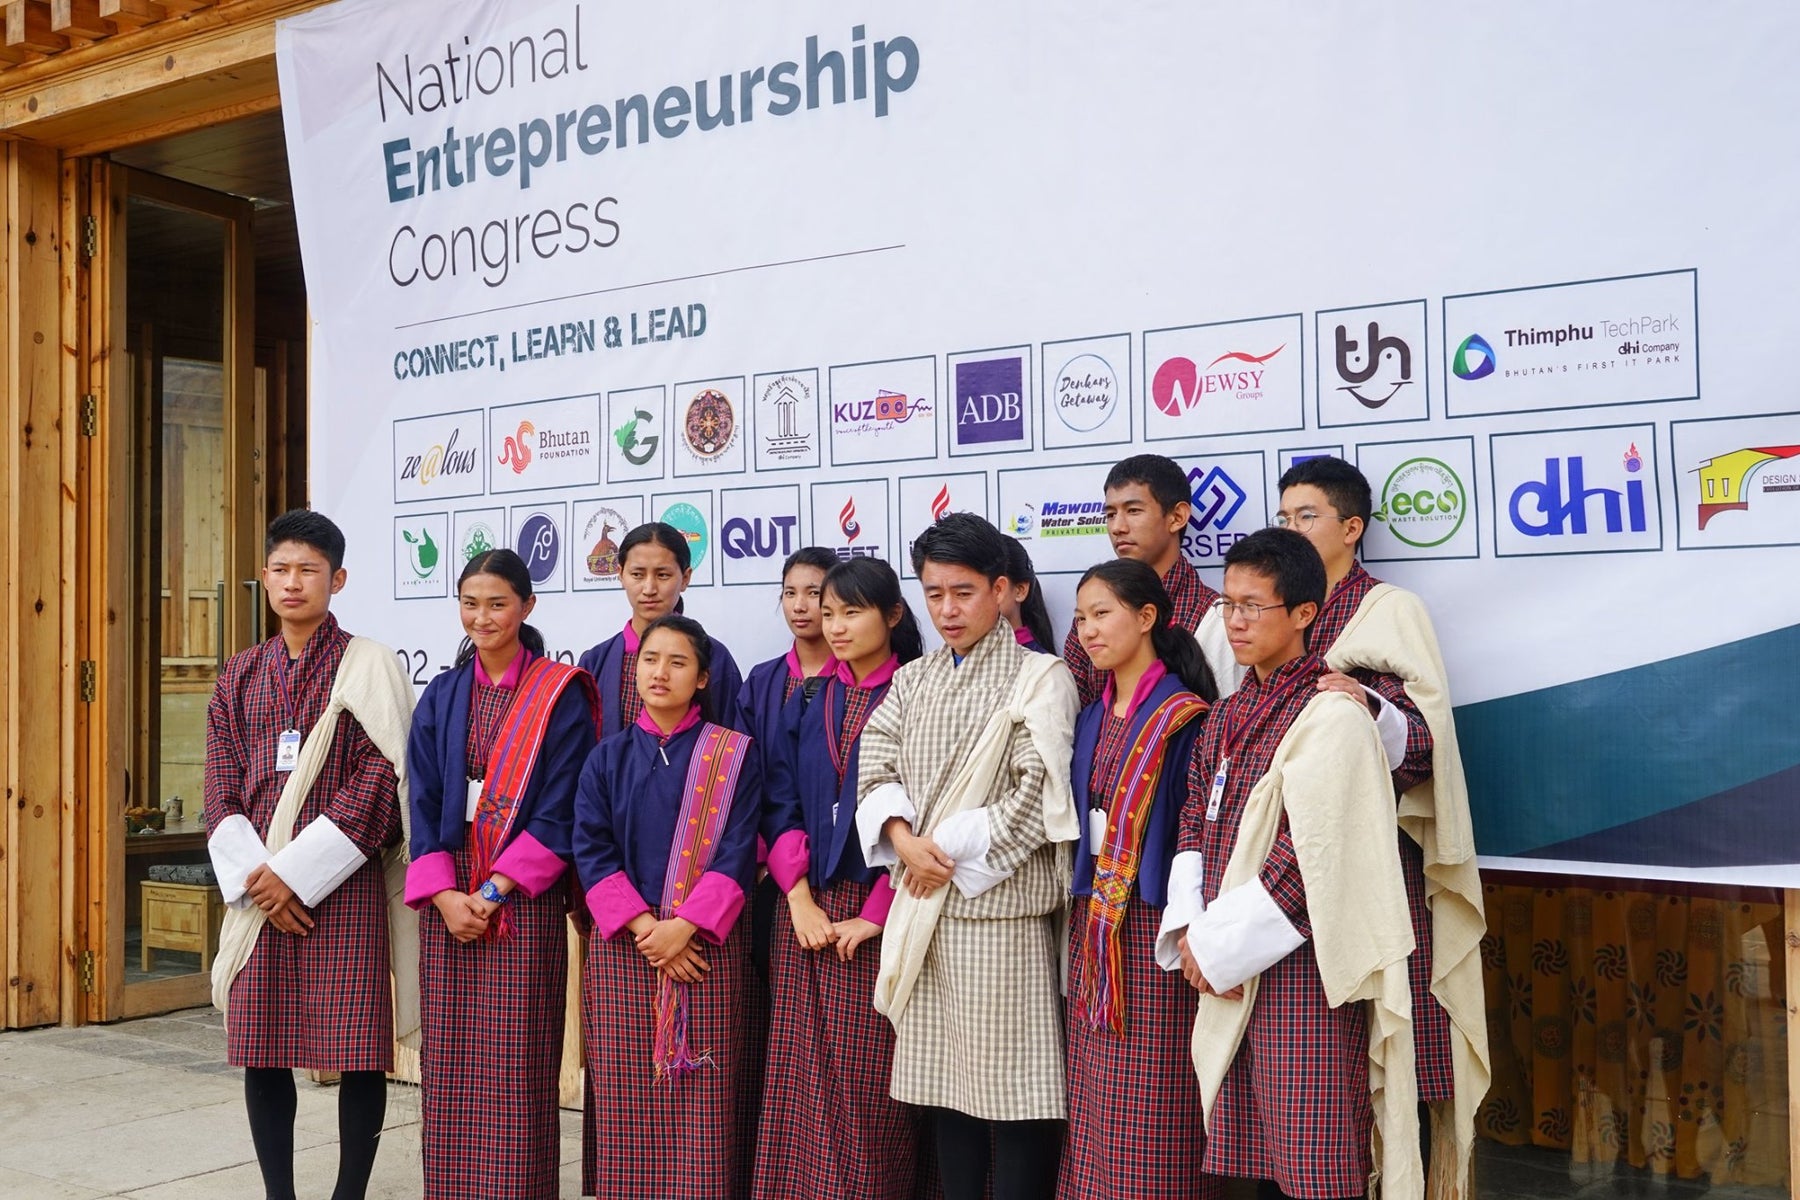 Bhutan National Entrepreneurship congress